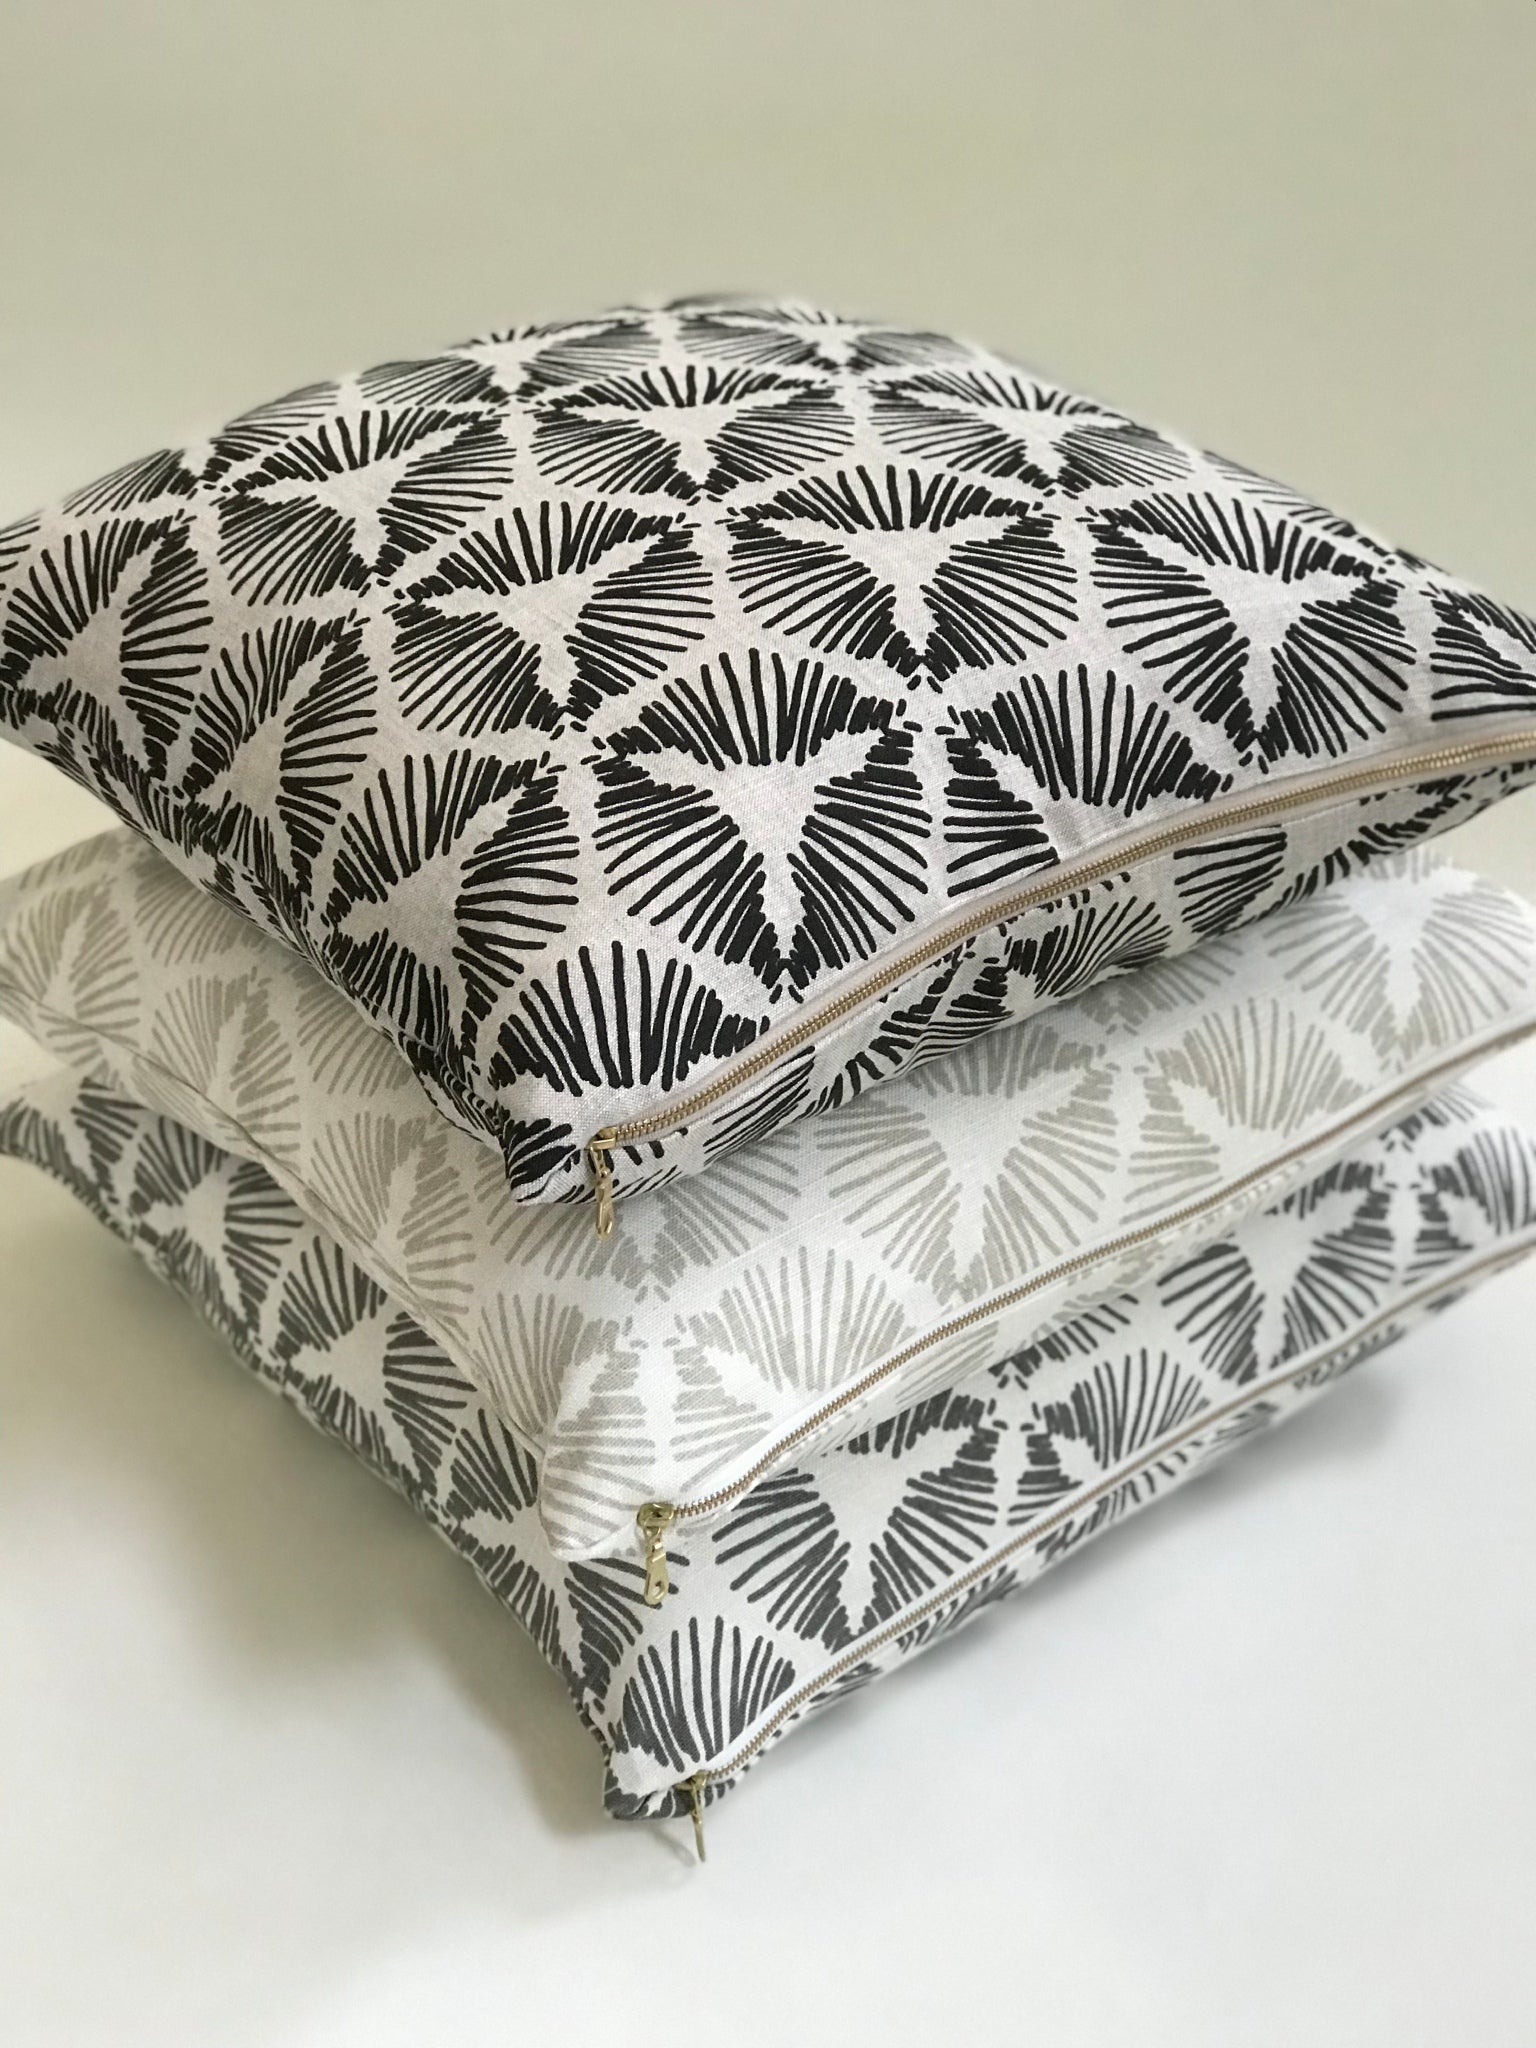 Cie pillow Heron on Oyster greige textiles linen greige design shop + interiors